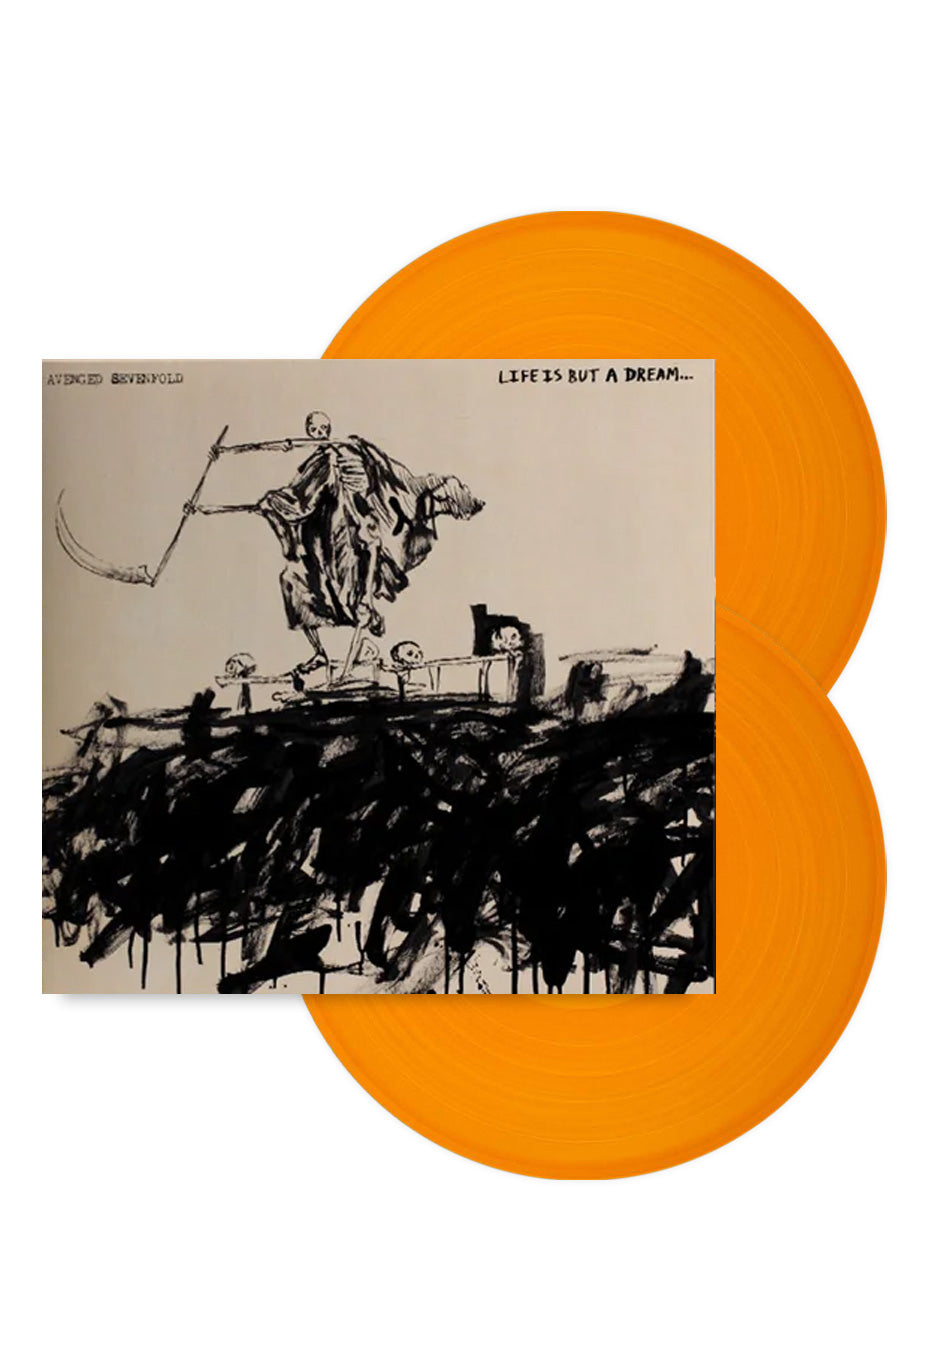 Avenged Sevenfold - Life Is But A Dream Ltd. Orange - Colored 2 Vinyl